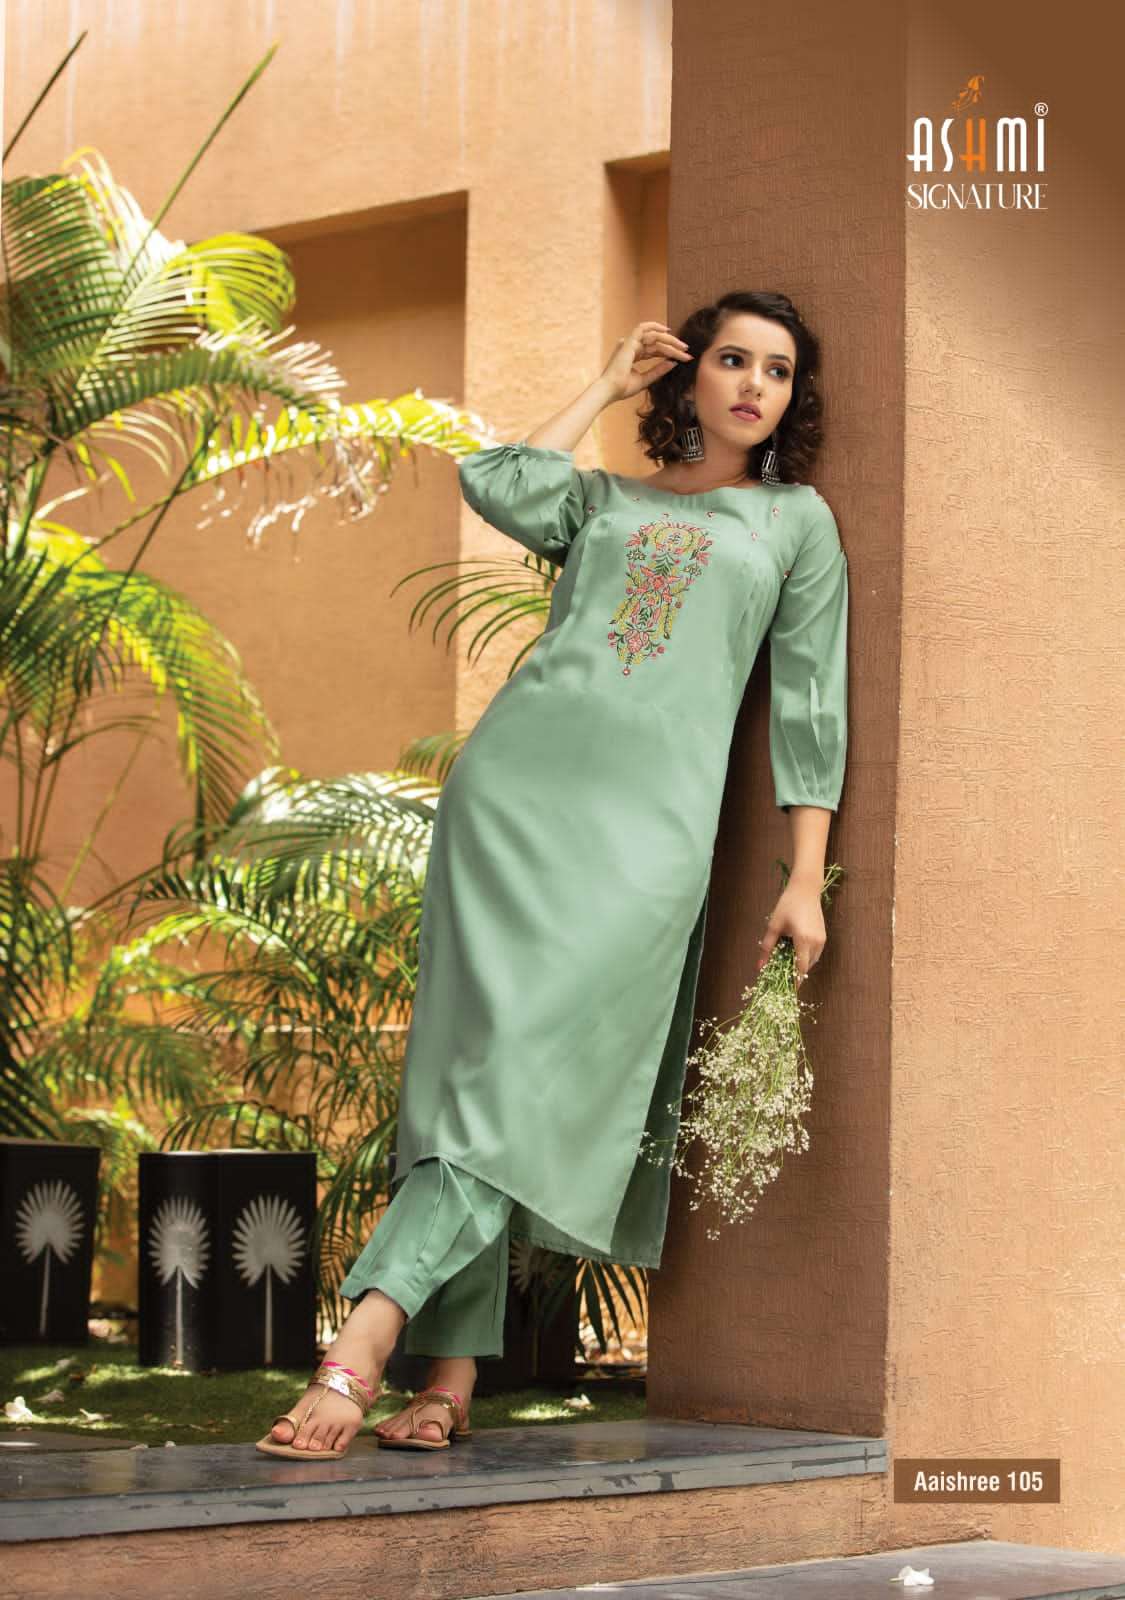 ashmi signature aaishree series 101 - 106 designer heavy cotton kurti with pant set online shopping surat 